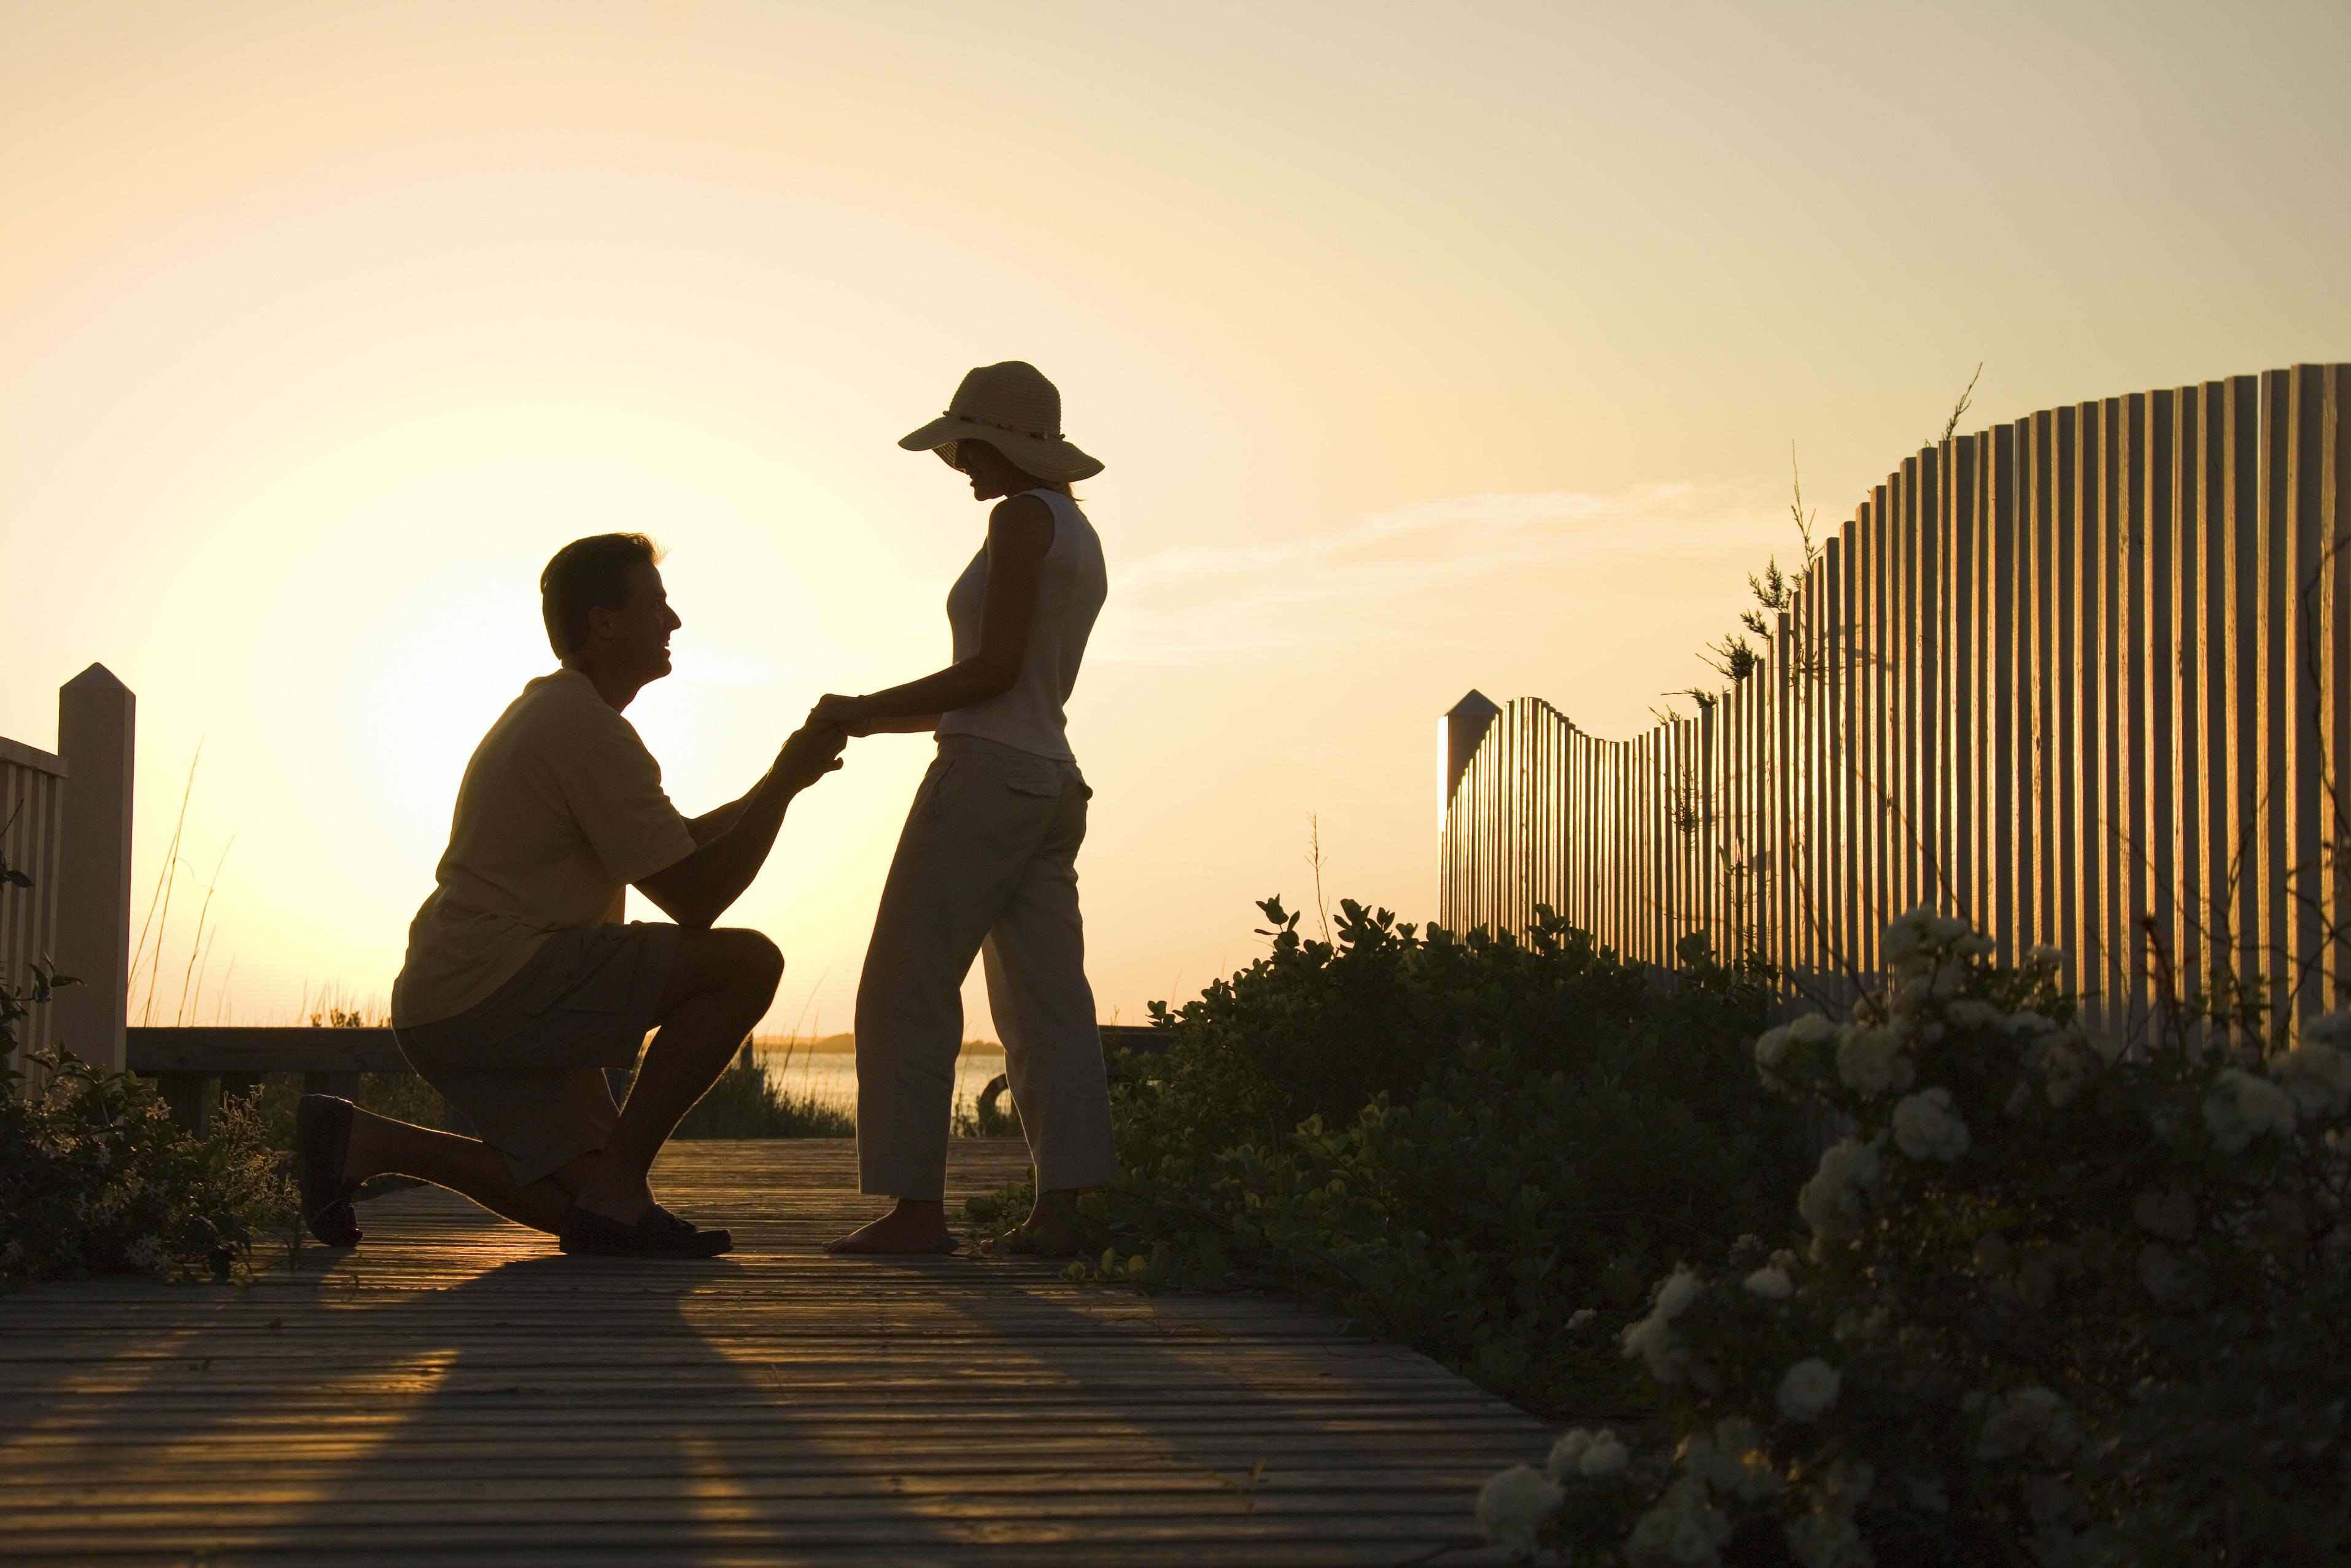 Silhouette of man proposing to woman on beach boardwalk